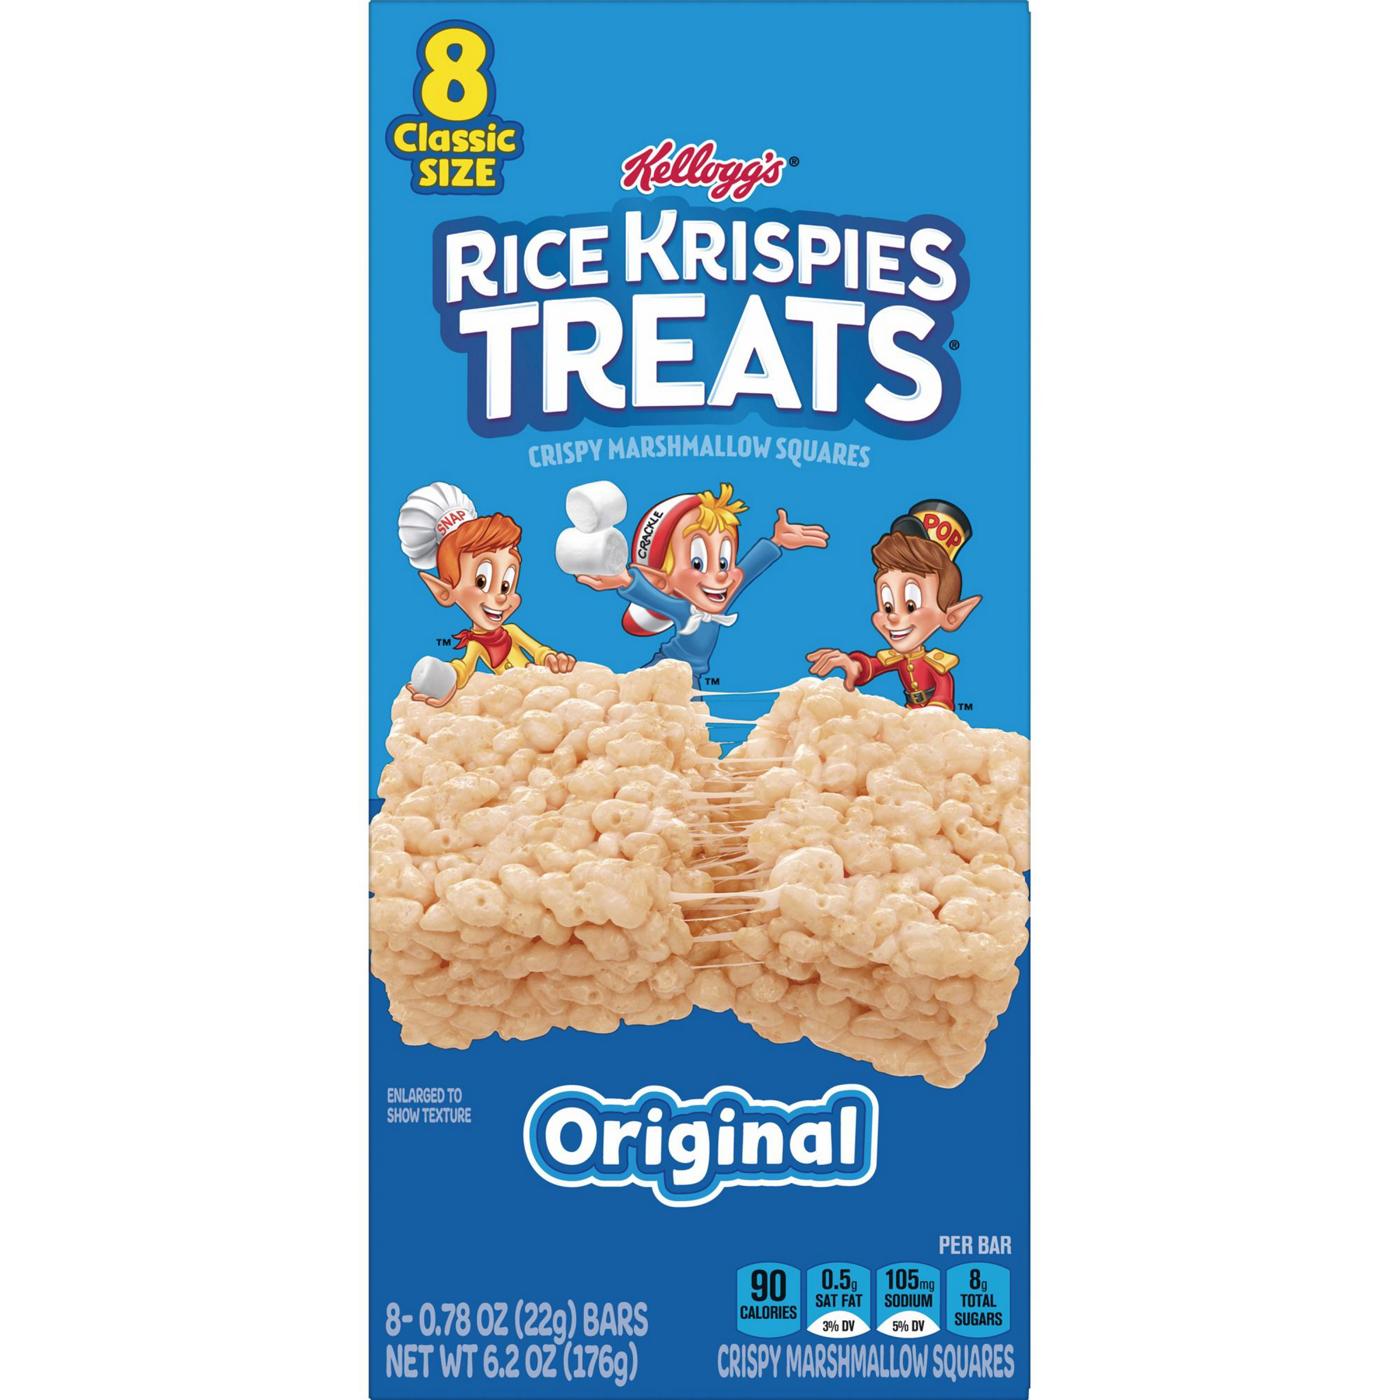 Rice Krispies Treats Original Crispy Marshmallow Squares; image 1 of 6